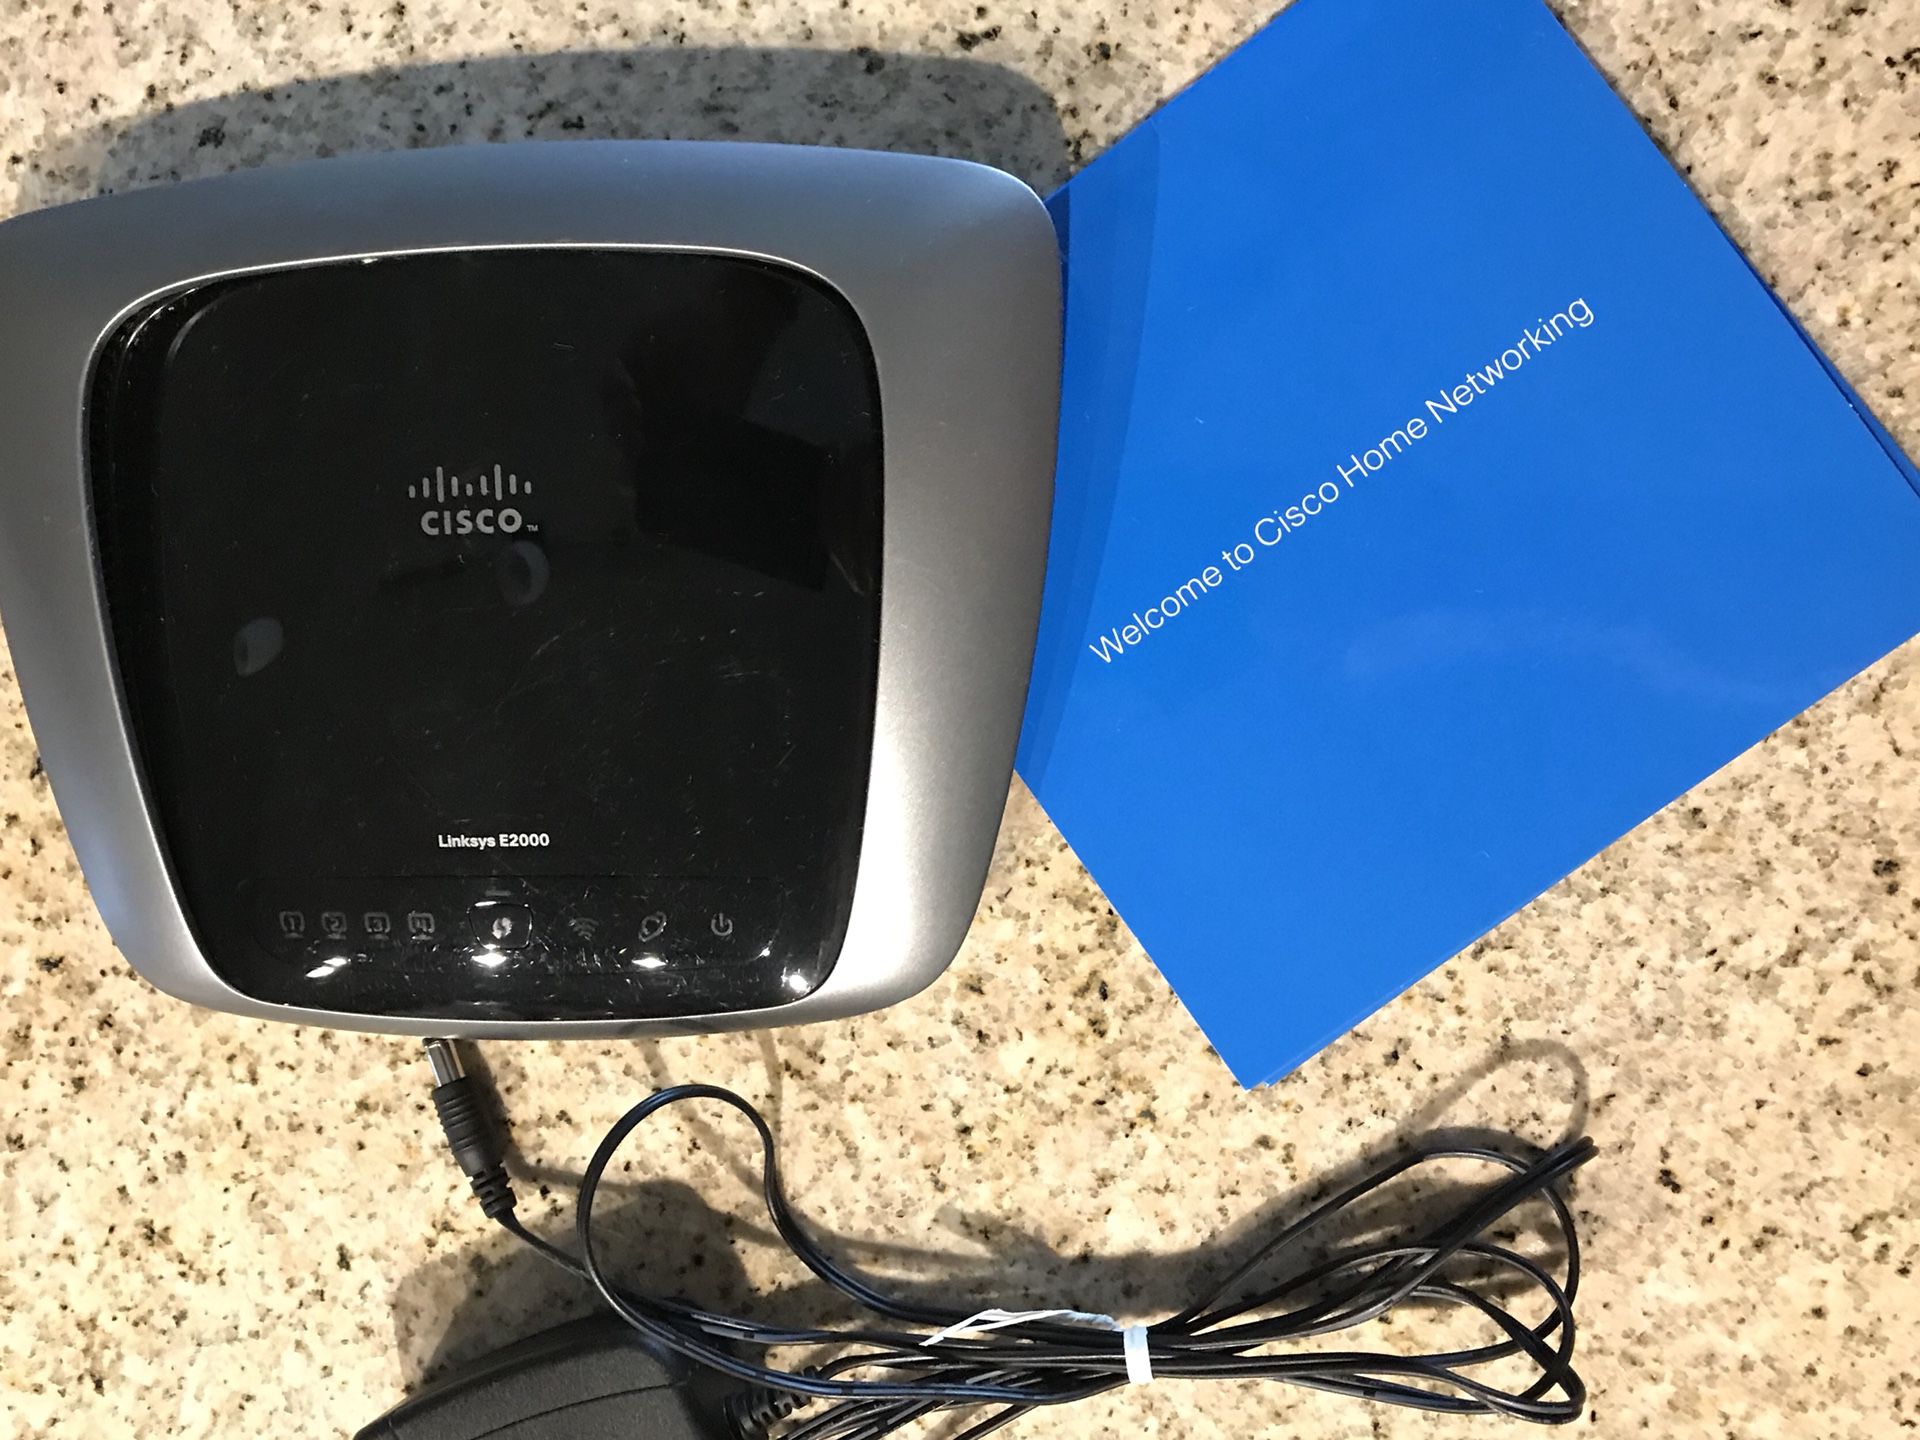 Cisco Lynksys E2000 Advanced Wireless N Router